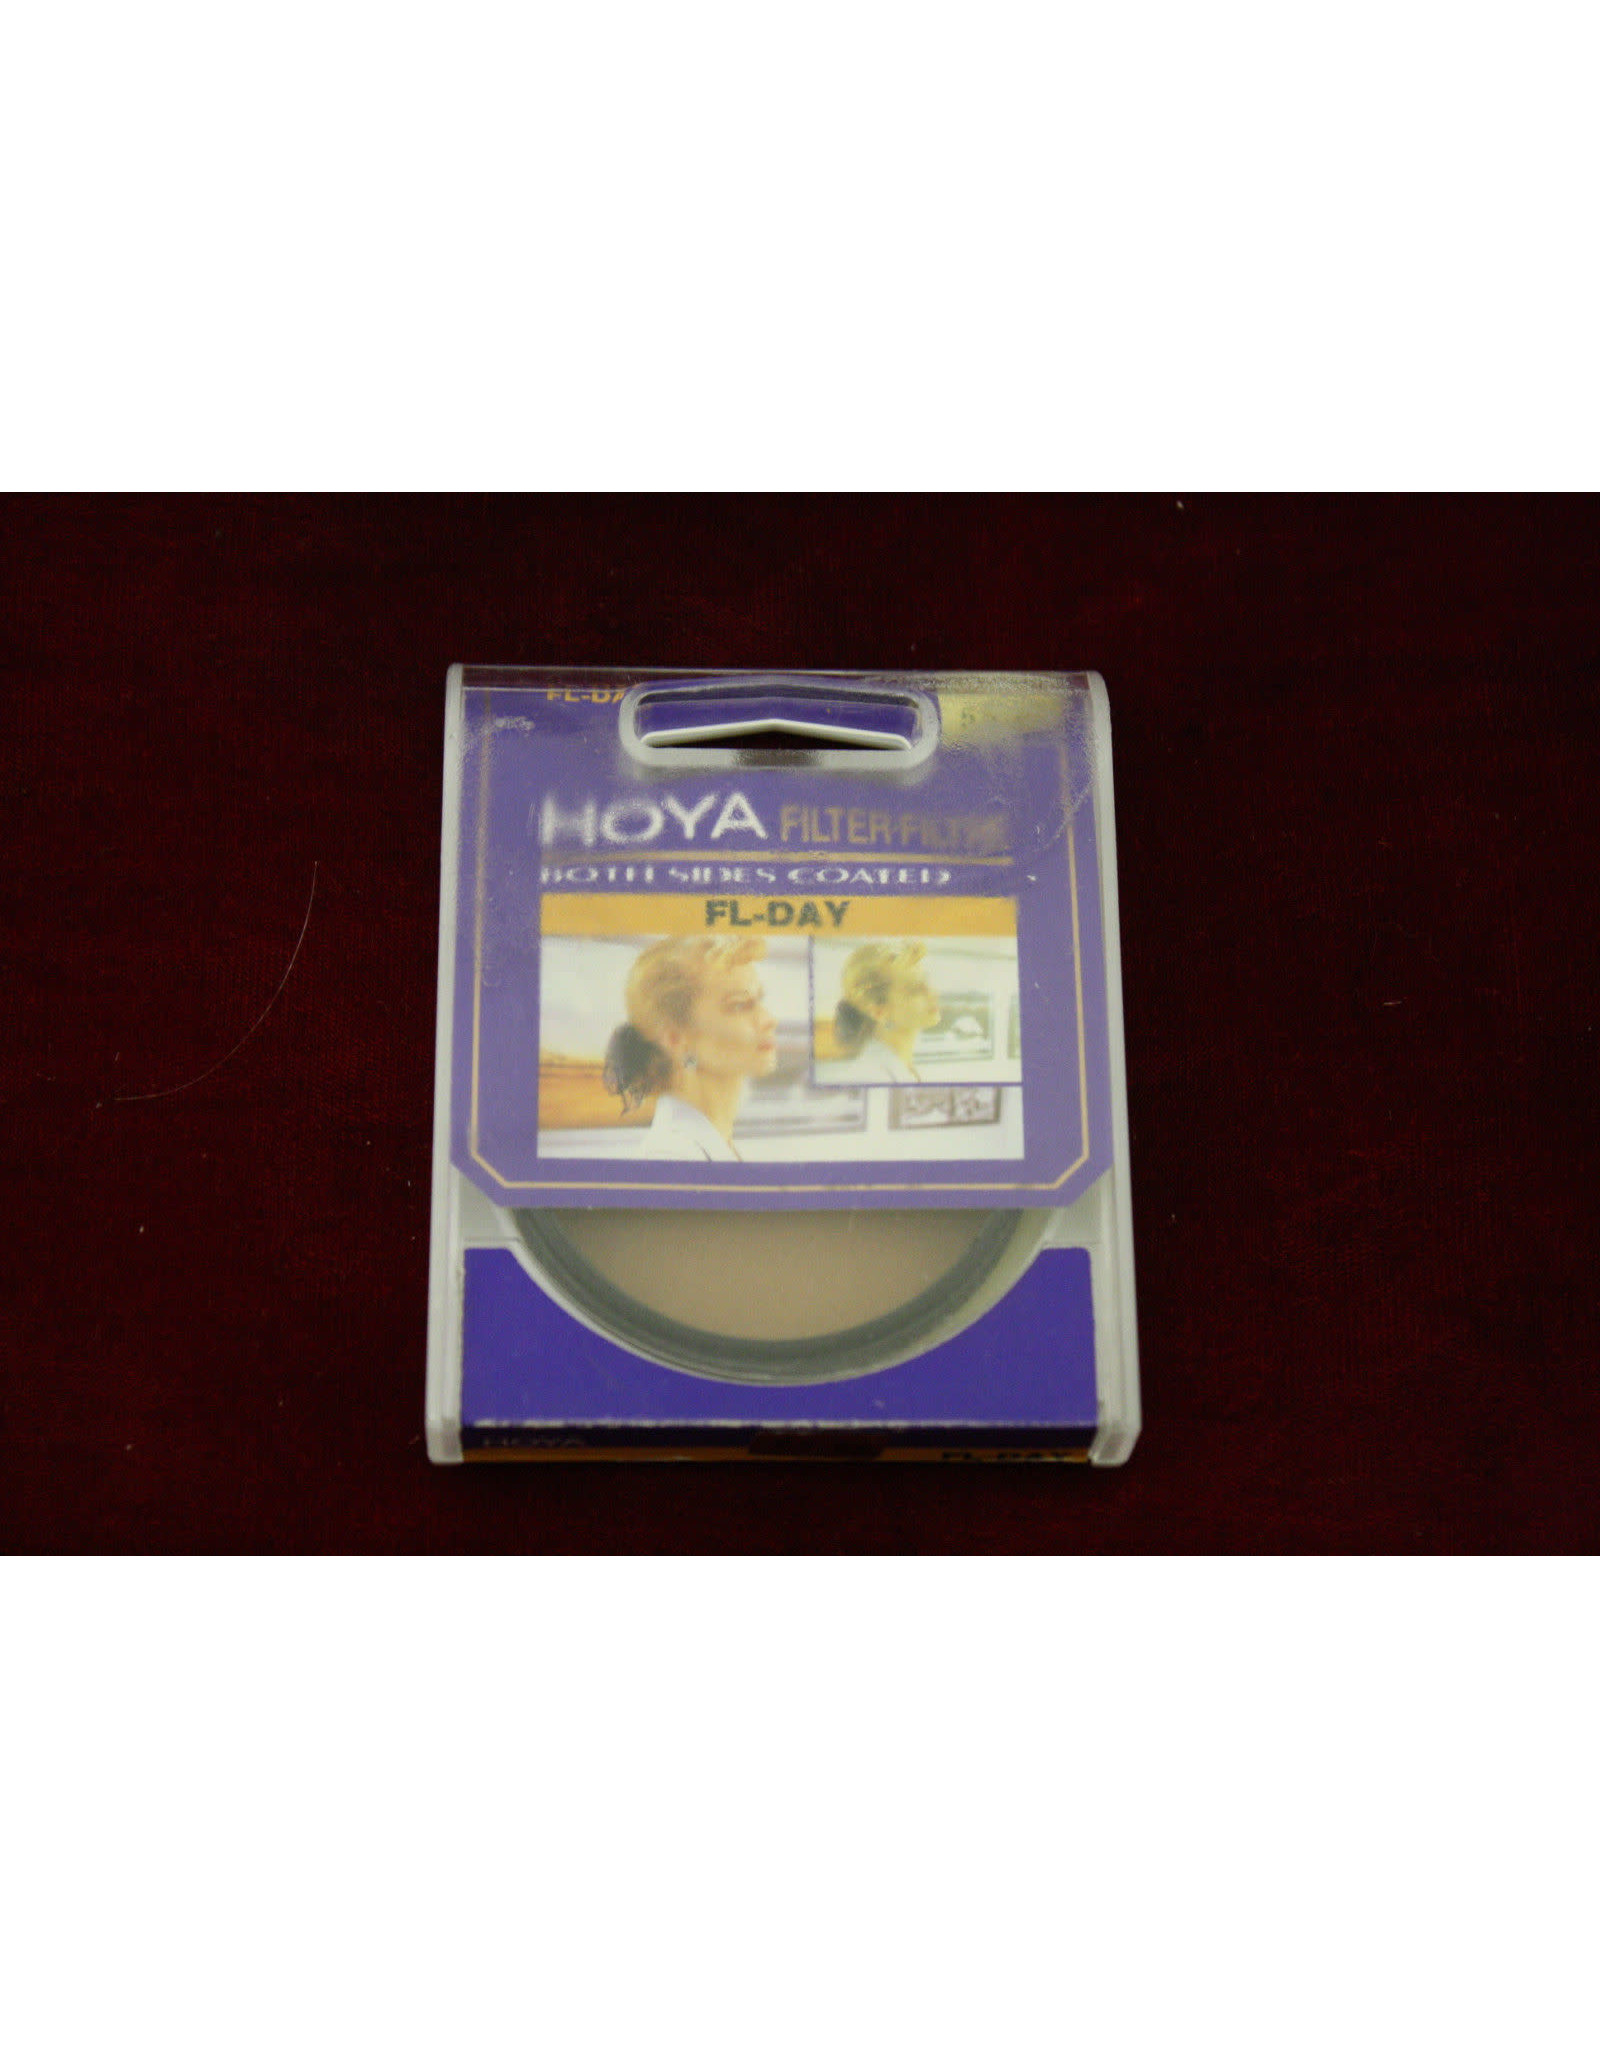 Hoya 55mm FL-DAY Filter